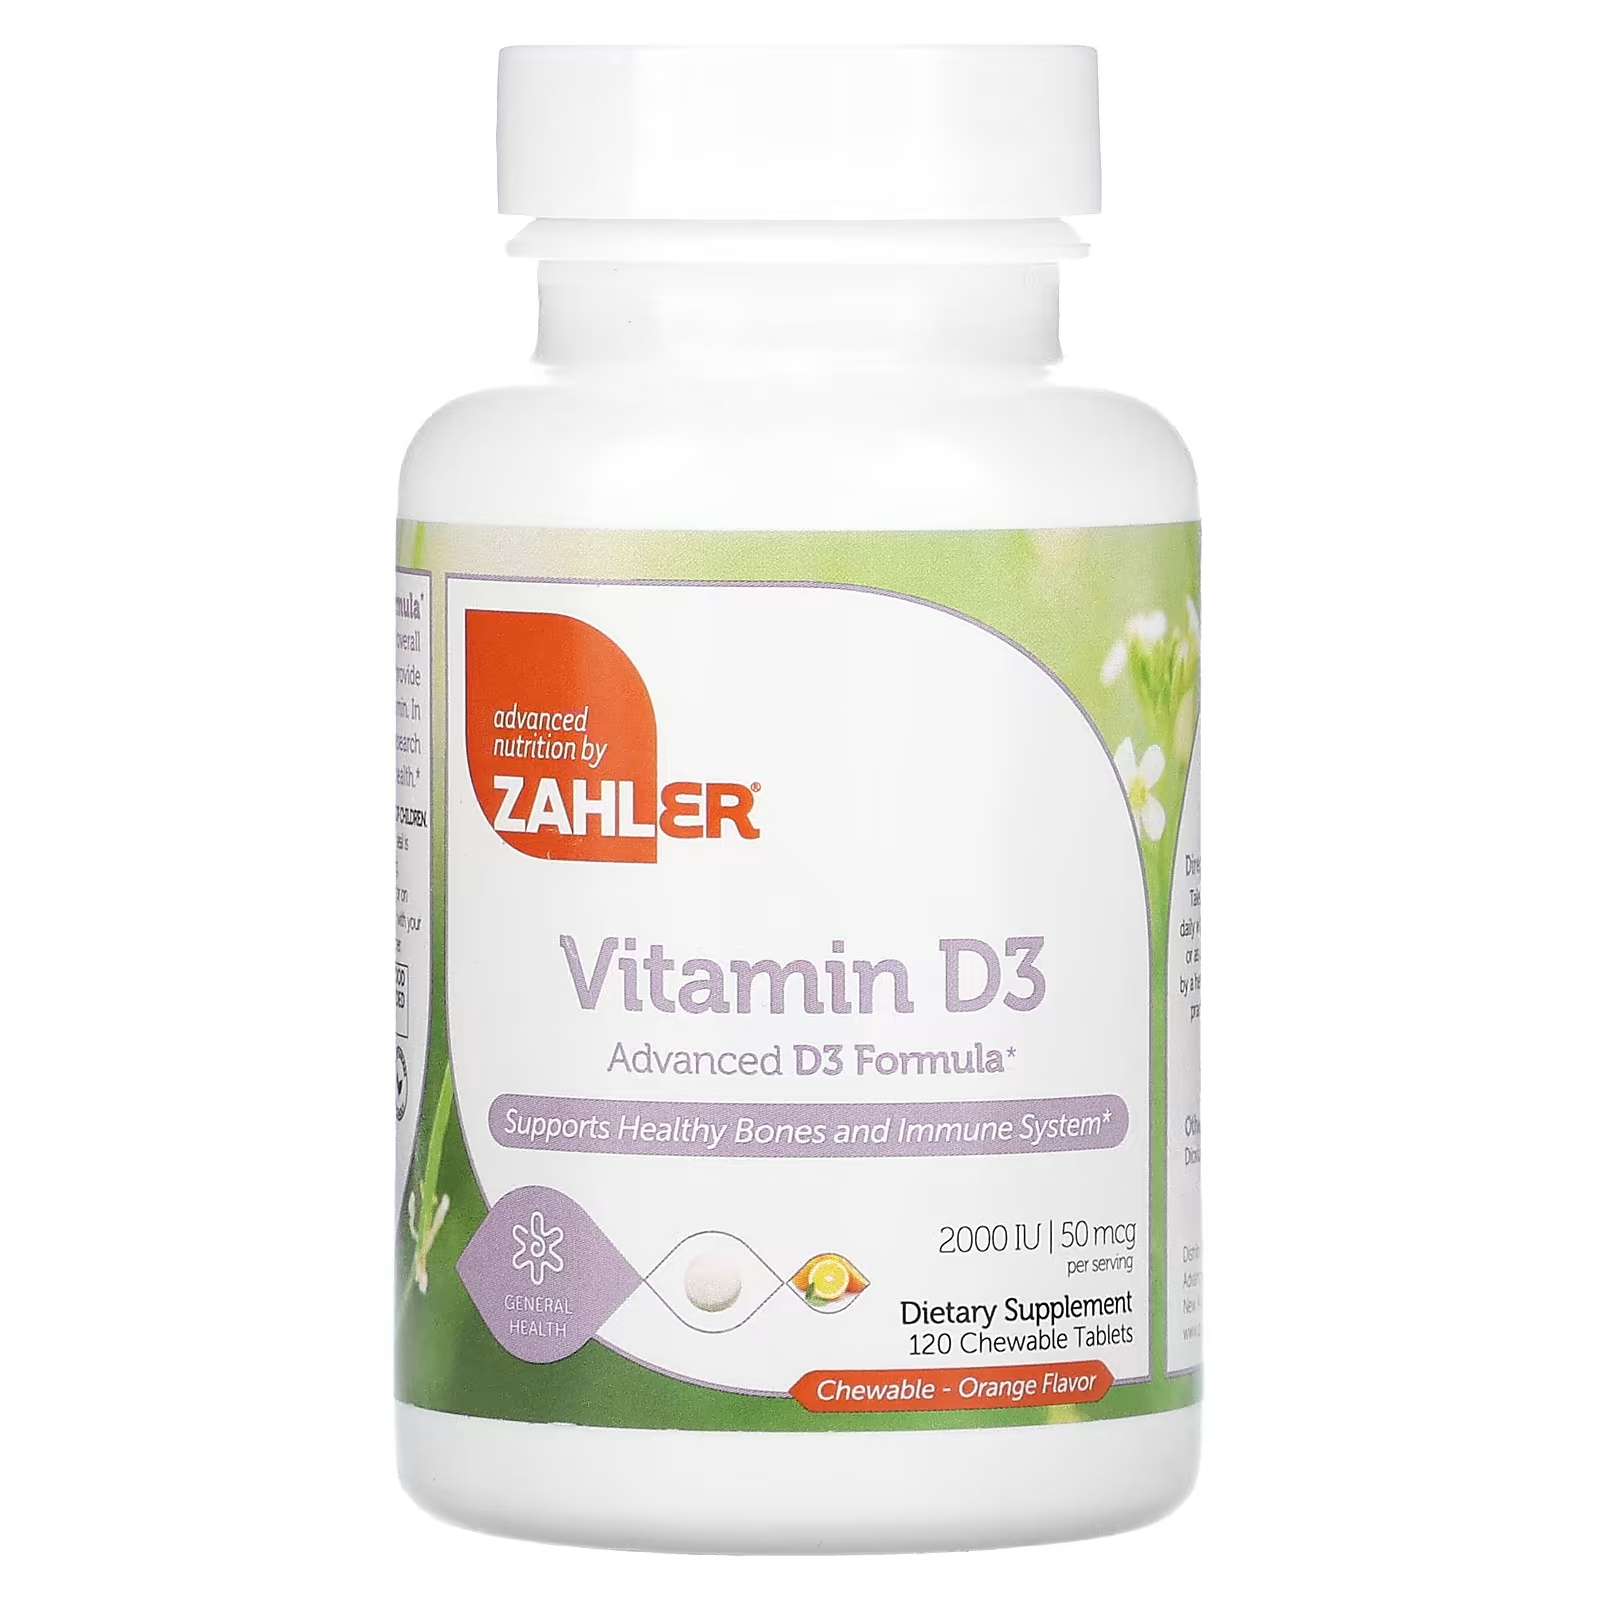 Витамин D3 Zahler апельсин 50 мкг 2000 МЕ, 120 таблеток zahler витамин d3 апельсин 50 мкг 2000 ме 120 жевательных таблеток